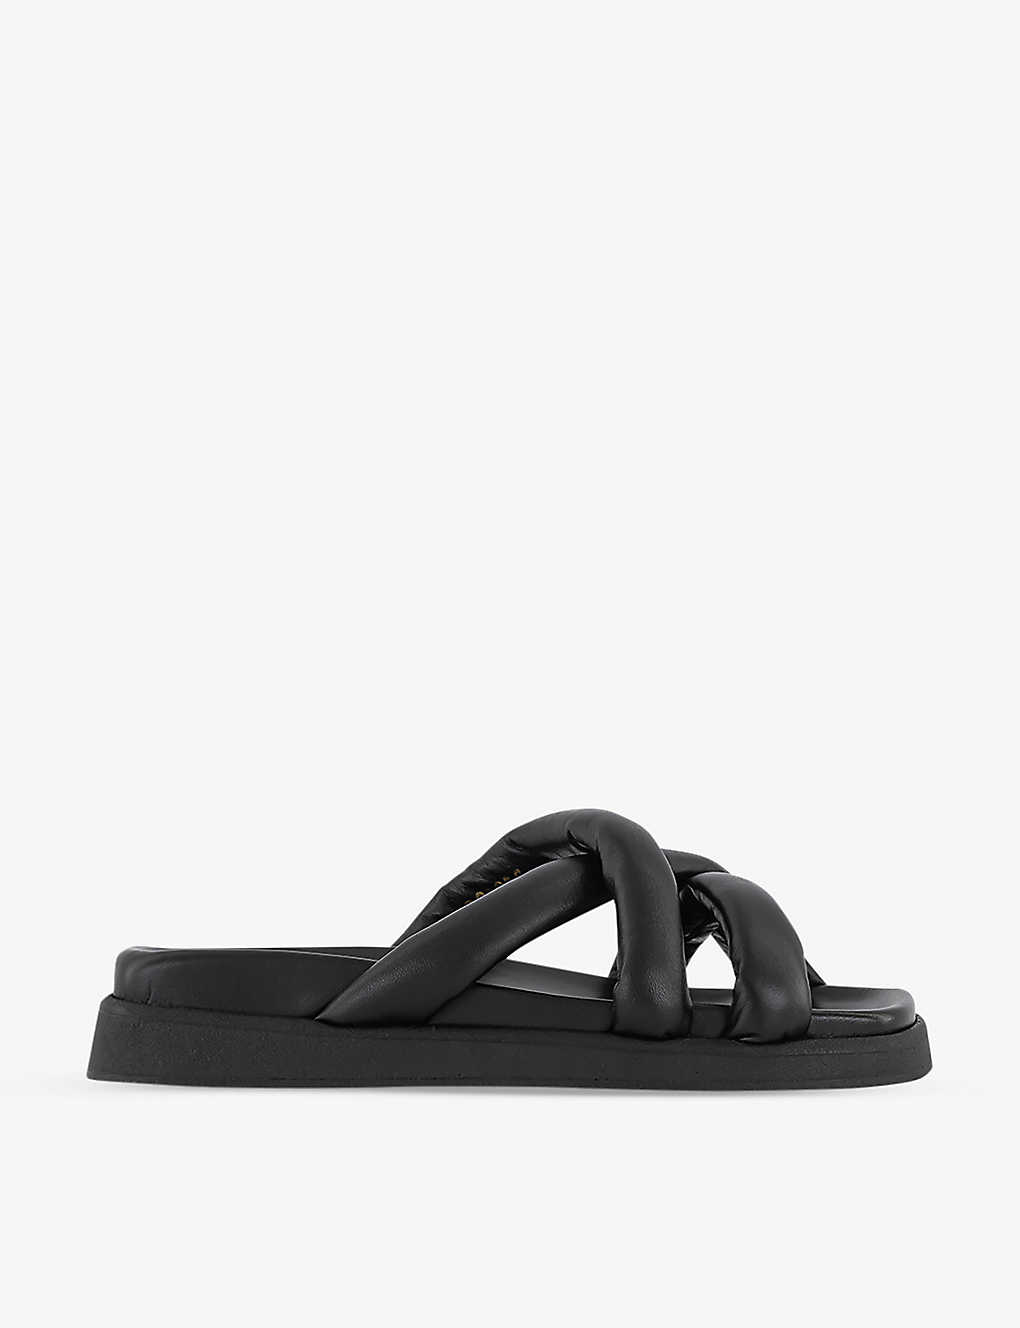 Alohas Womens Black Square-toe Leather Sandals